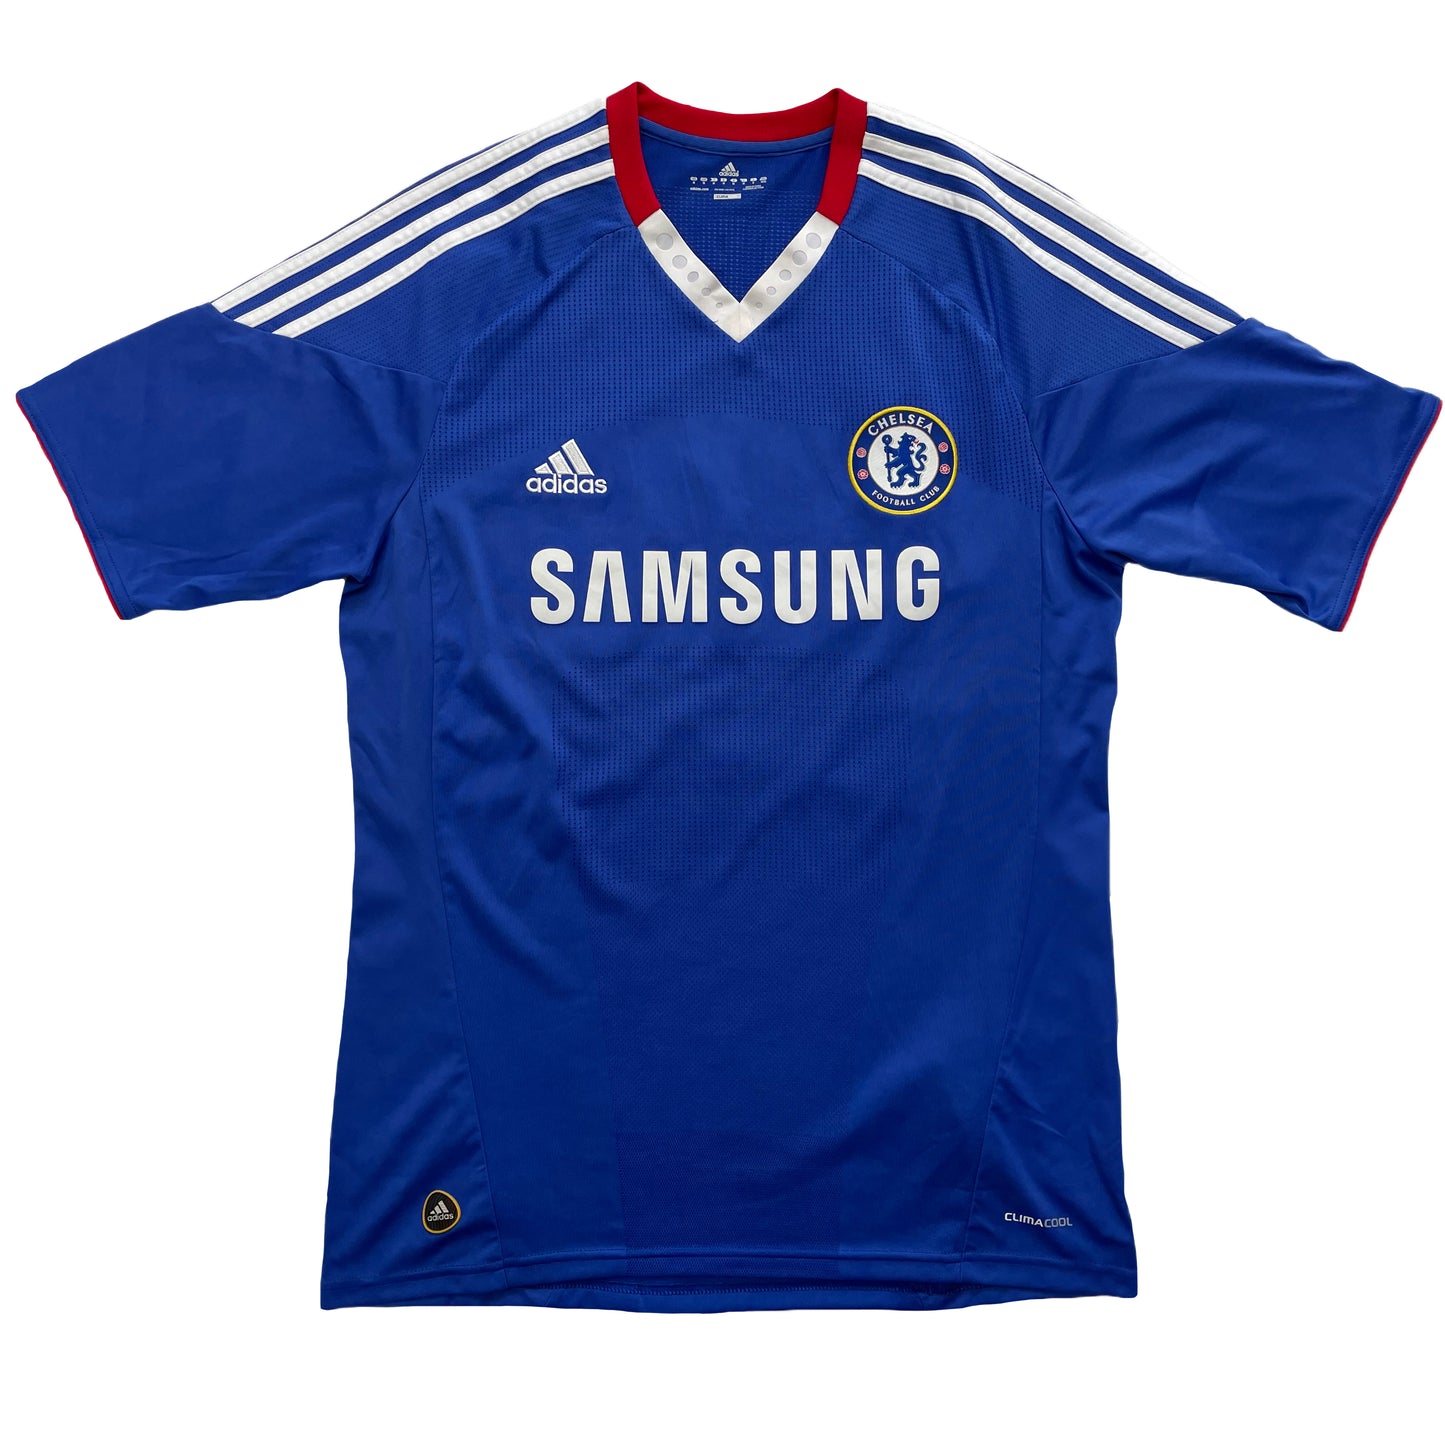 2010-2011 Chelsea FC home shirt #8 Lampard (M)